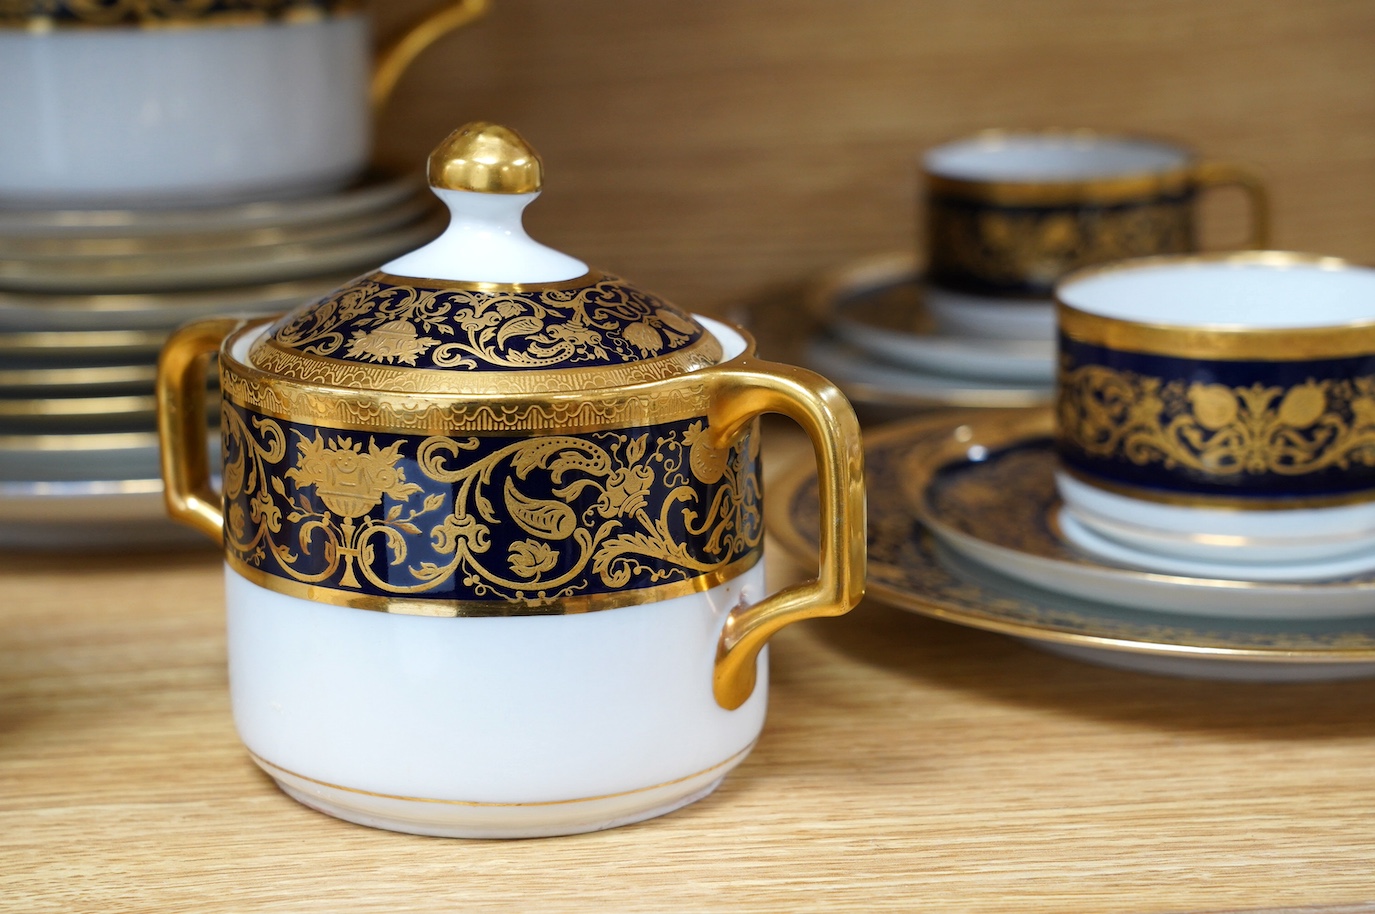 A Comte Harrach, Karlsbad, Bavarian rich dark blue and gilt banded part tea set, largest 32cm wide. Condition - fair to good